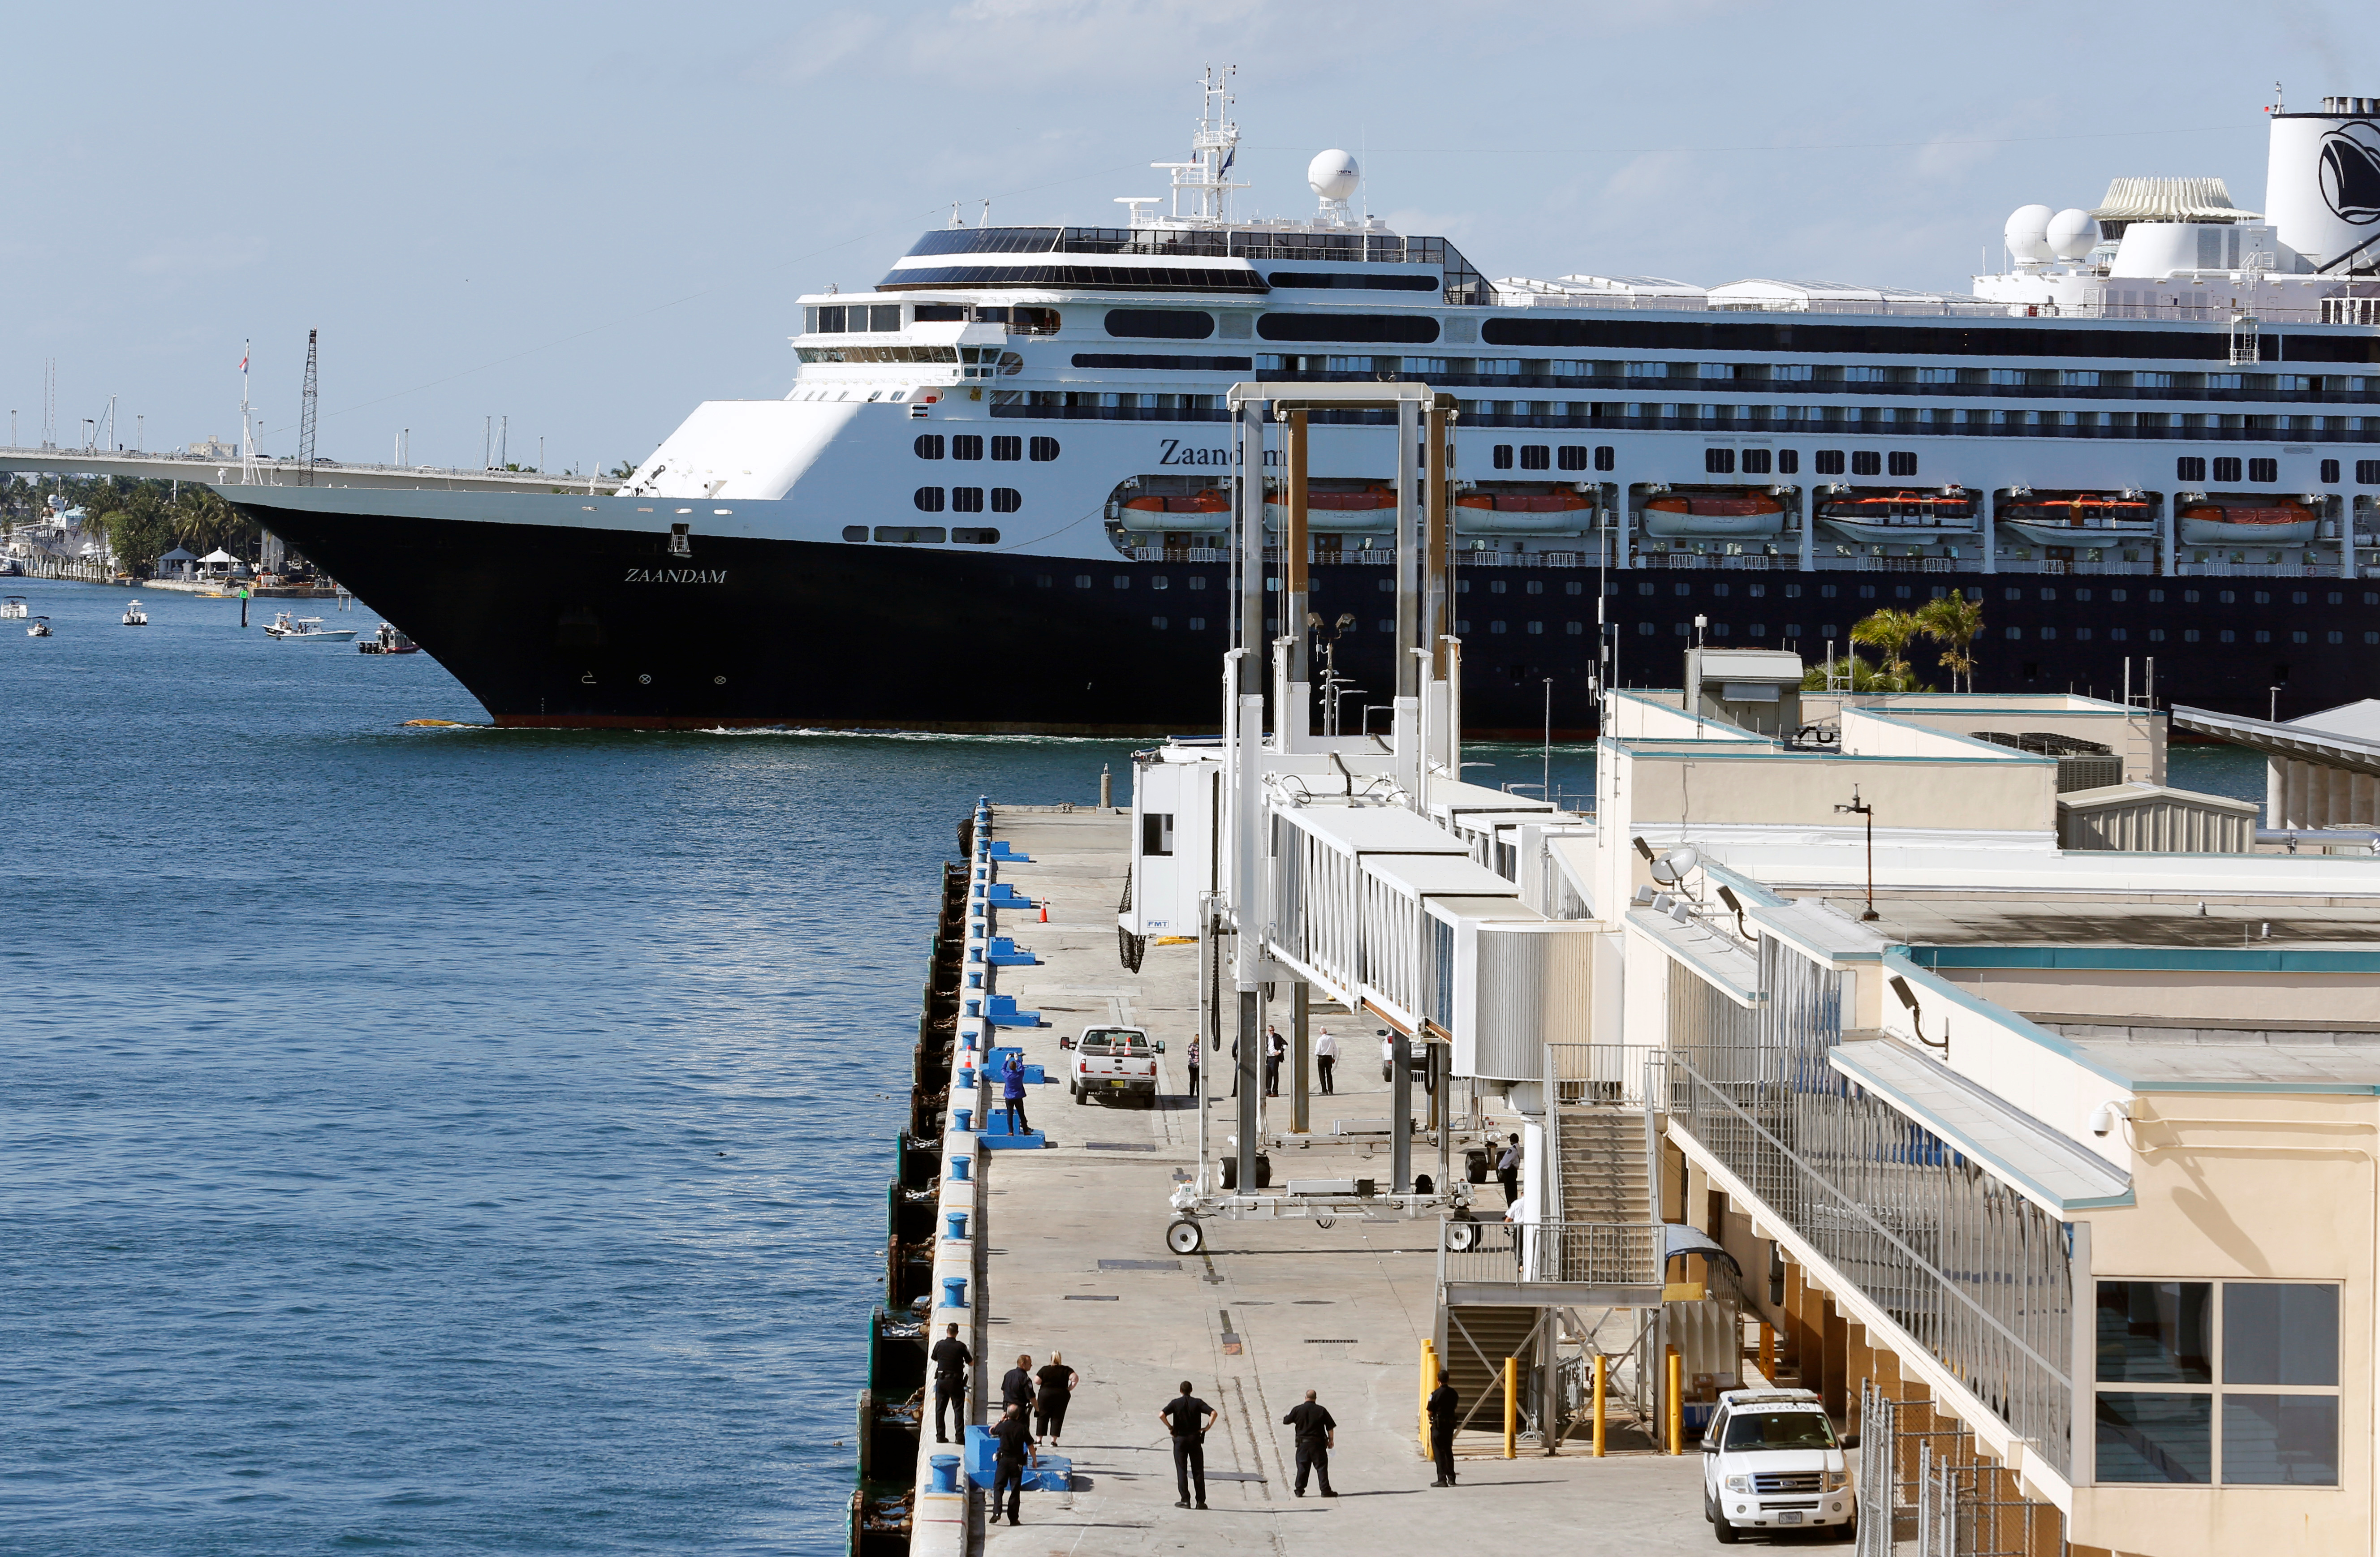 Crucero Zaandam con pacientes de coronavirus llegó al puerto de Fort Lauderdale